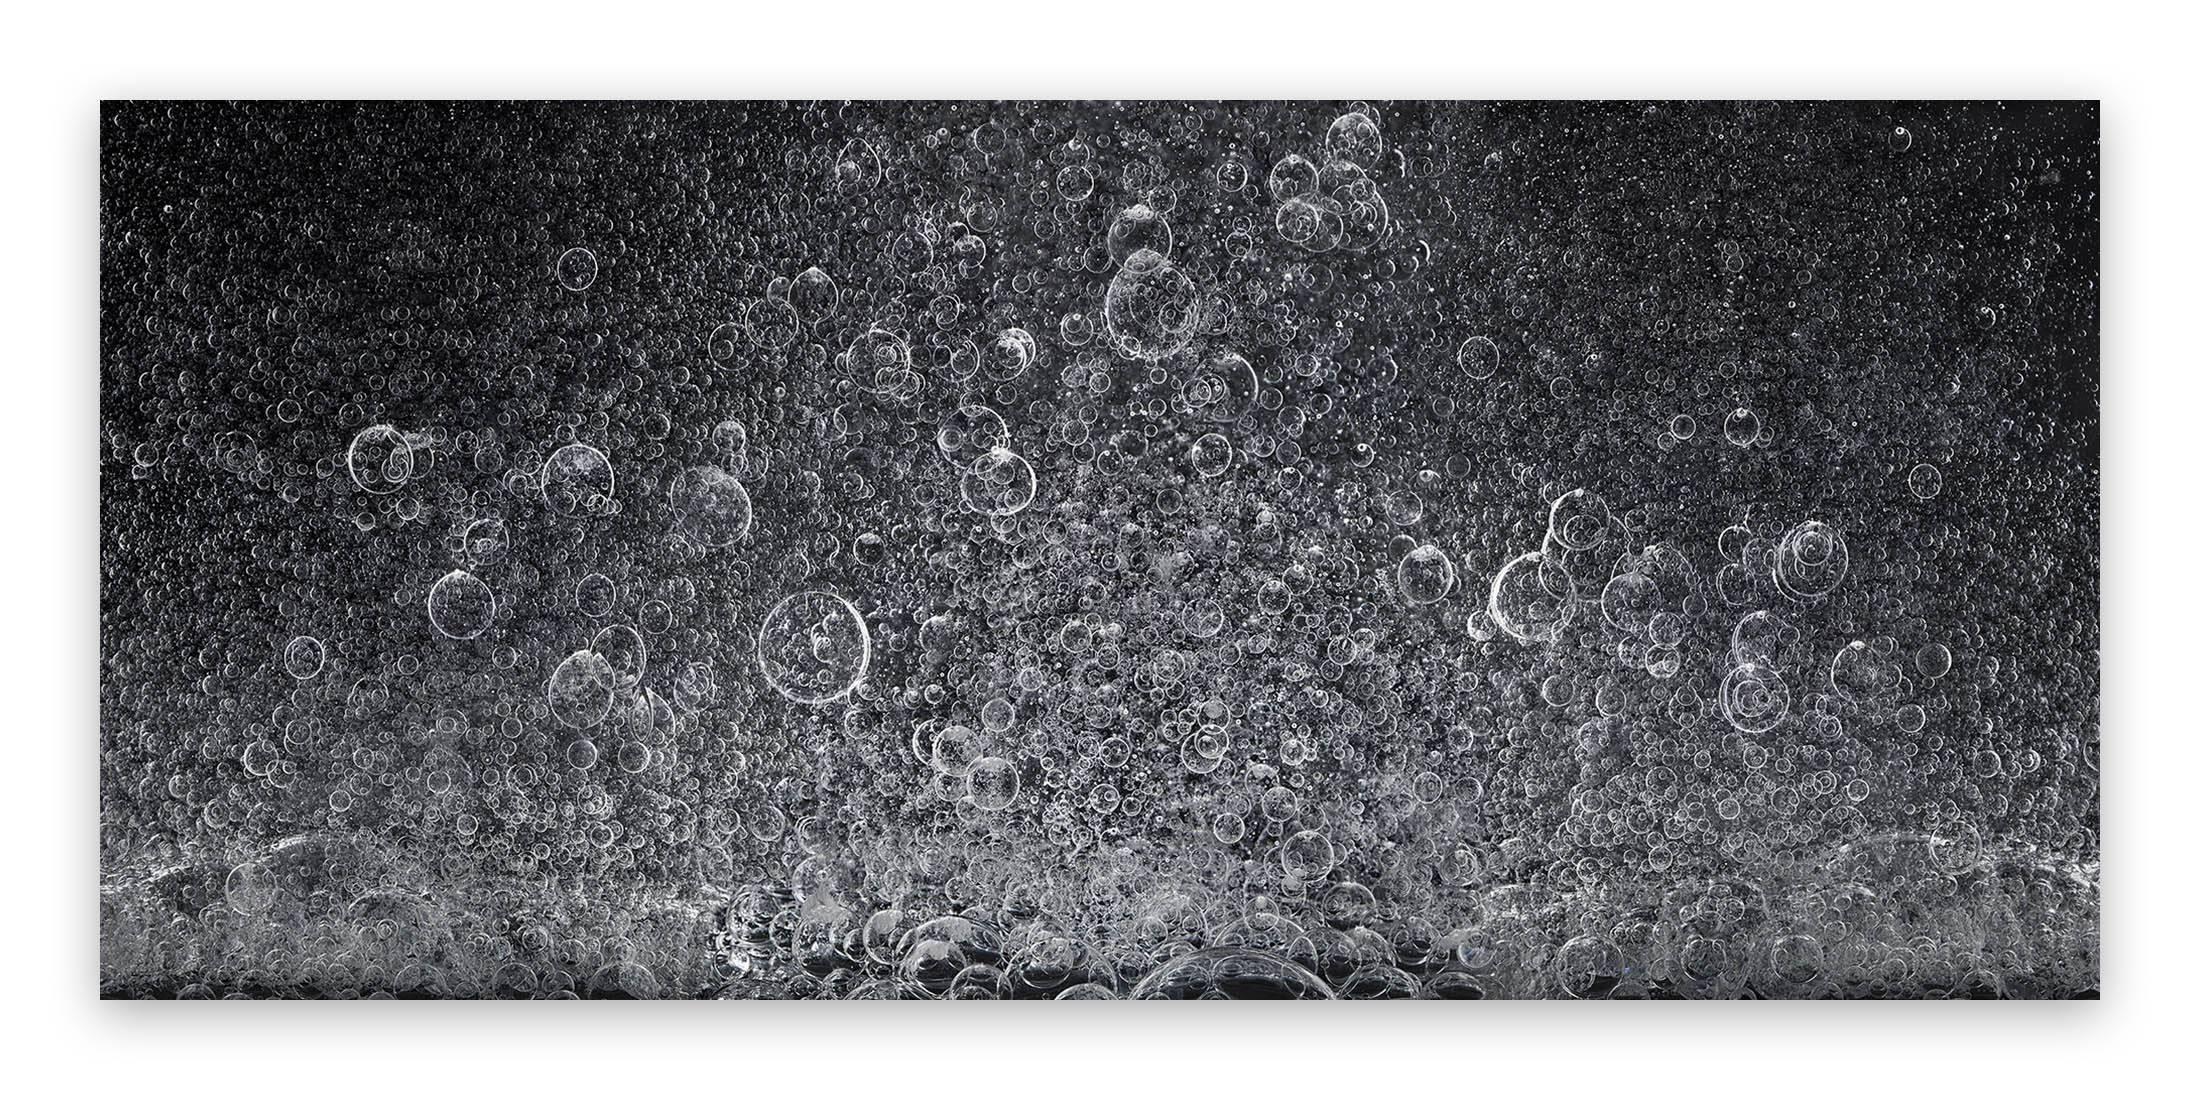 Seb Janiak Black and White Photograph - Gravity - Liquid 51 (Abstract Photography)